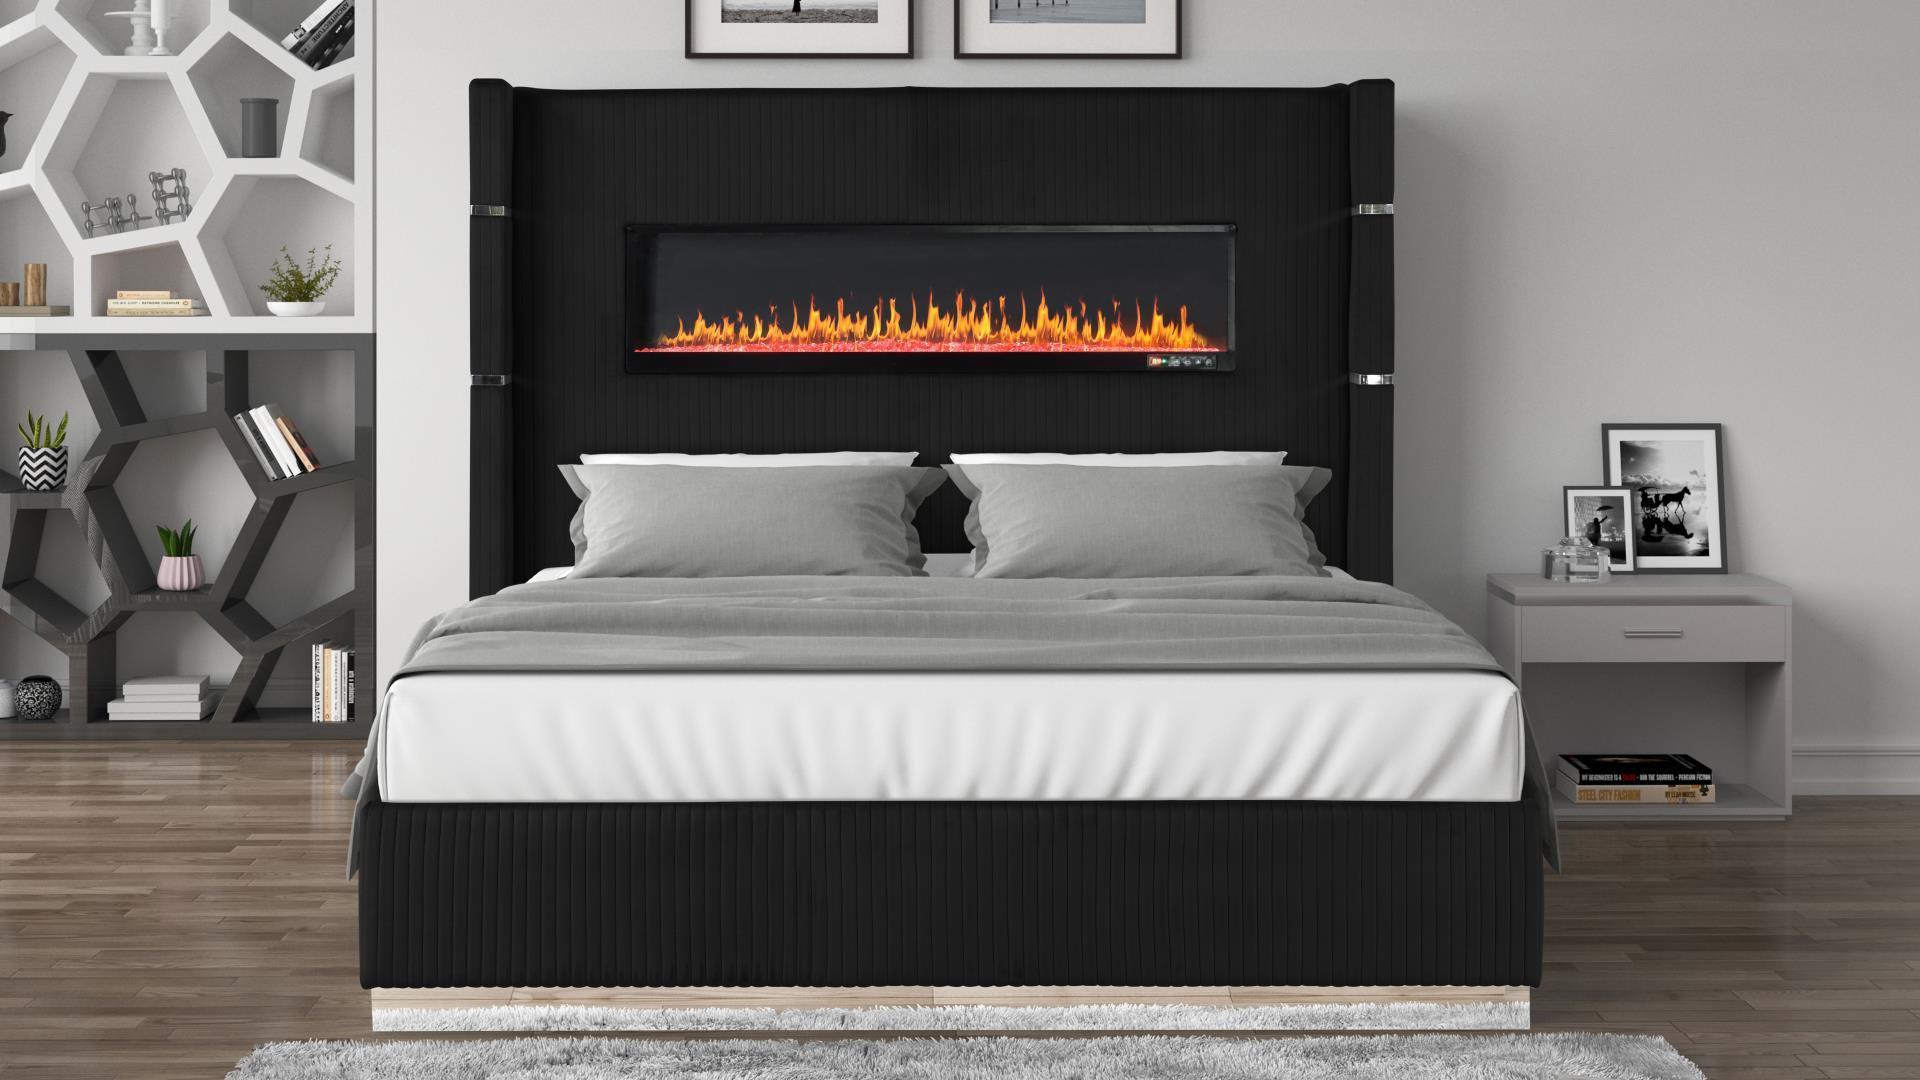 

    
Black King Bedroom Set 5Pcs LIZELLE Galaxy Home Contemporary Luxury
